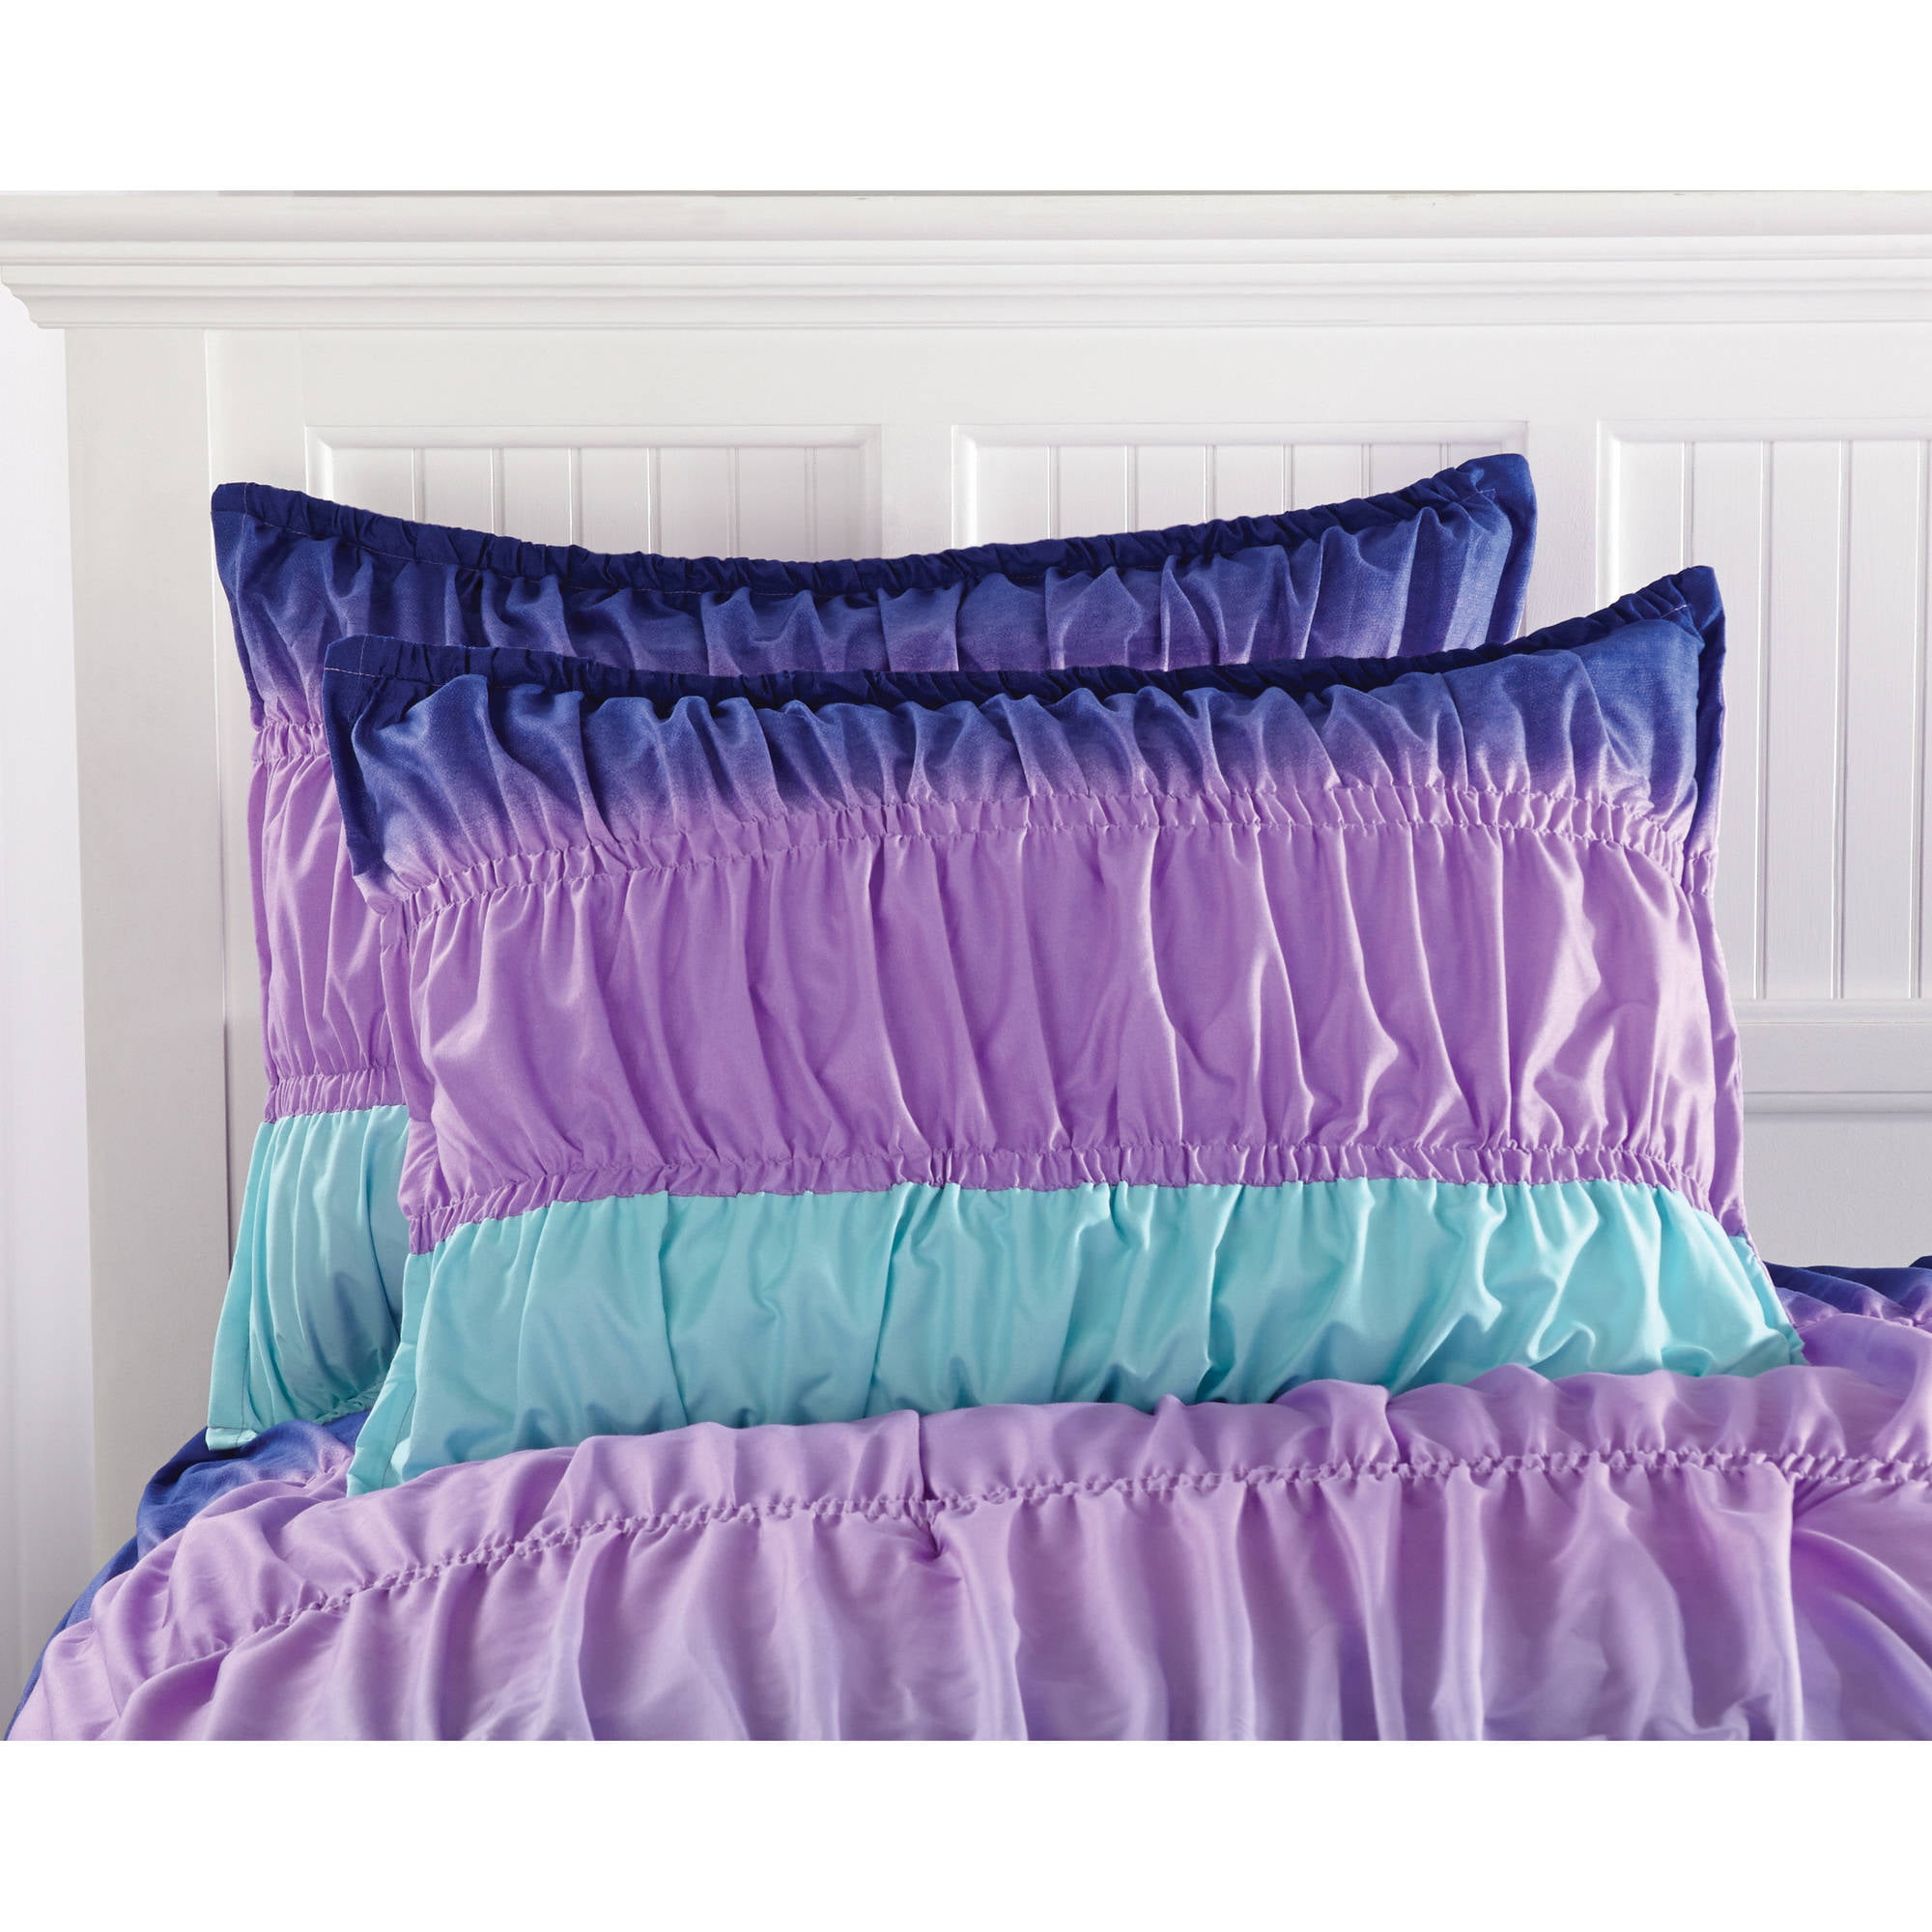 Girls Mint Comforter Twin XL Pastel Bedding Soft Reversible Microfiber Light